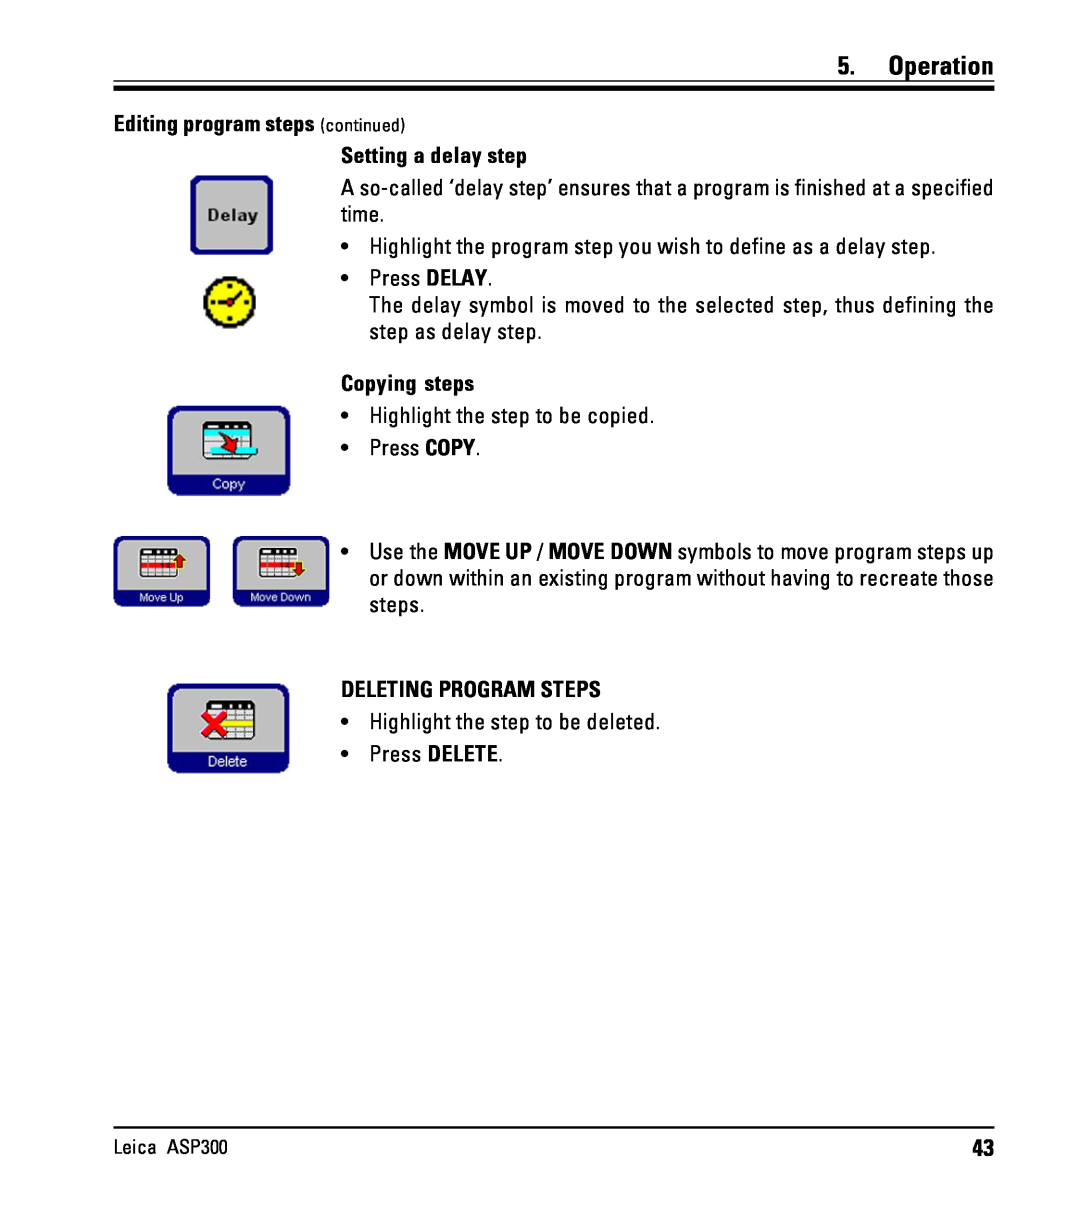 Leica ASP300 instruction manual Operation, Editing program steps continued 